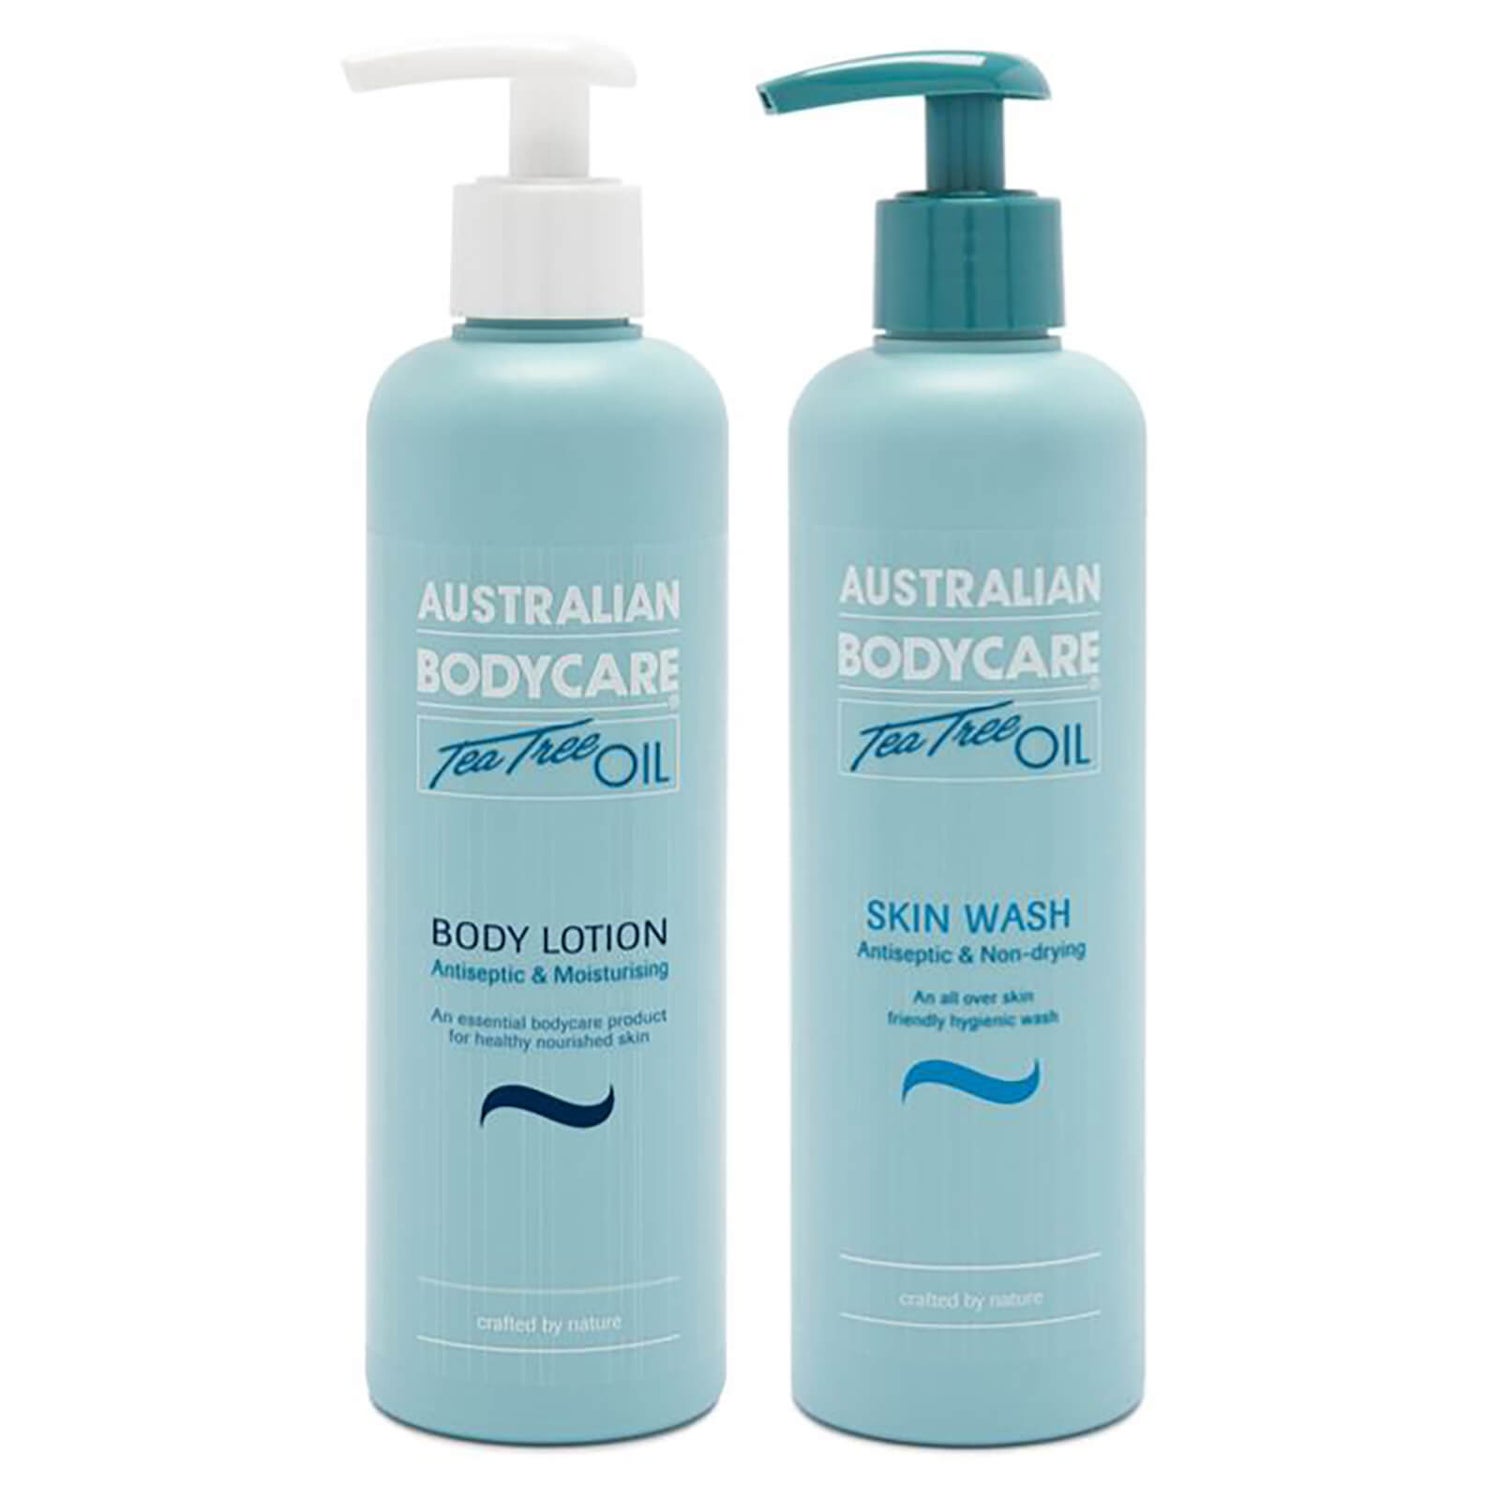 Australian Bodycare Body Lotion 250ml and Bodycare Skin Wash Bundle Buy Online Mankind